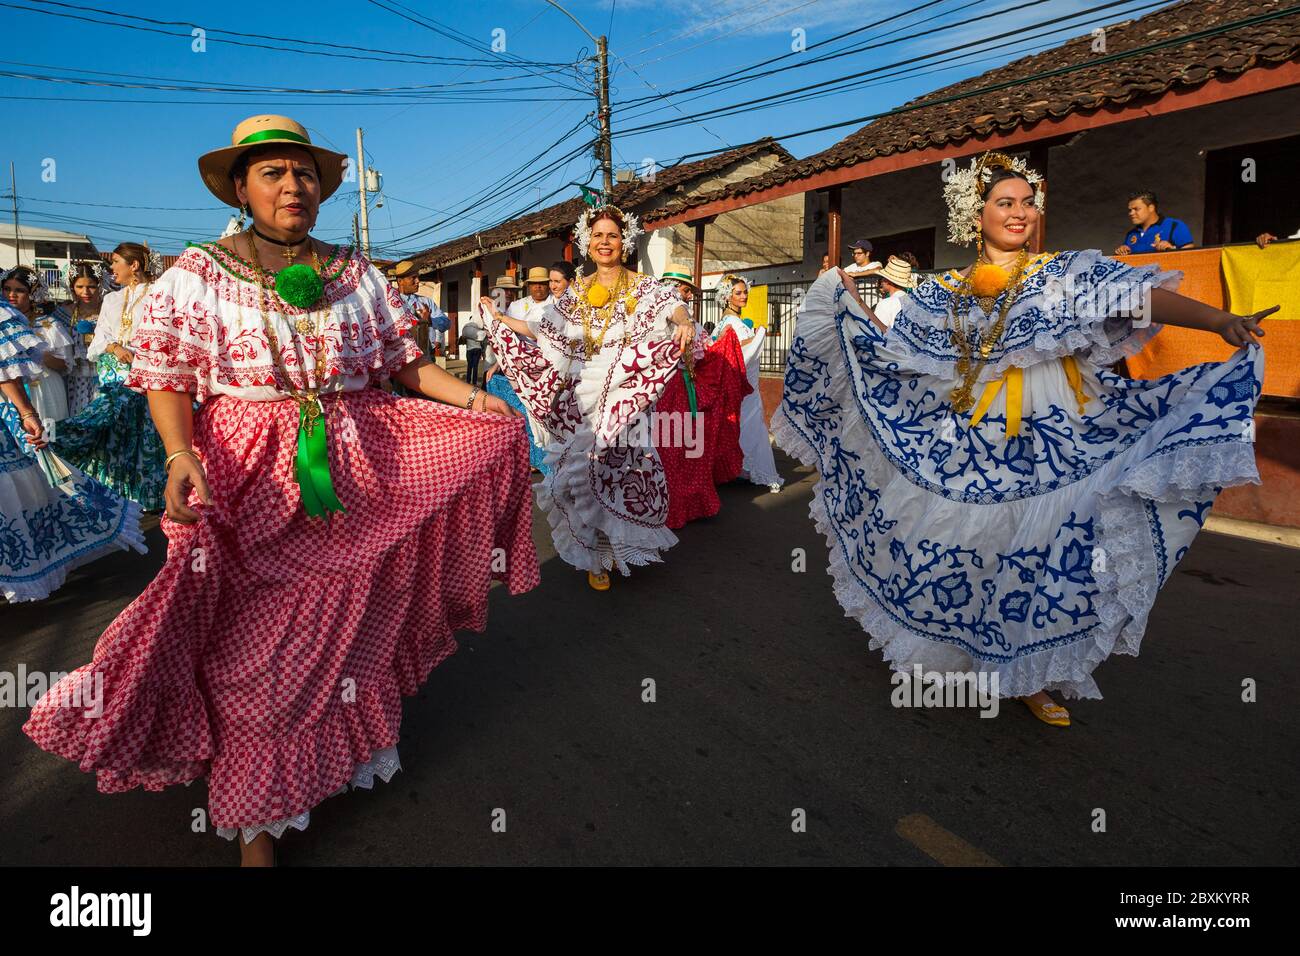 Donne in polline durante l'evento annuale 'El desfile de las mil polleras' (migliaia di polline) a Las Tablas, provincia di Los Santos, Repubblica di Panama. Foto Stock